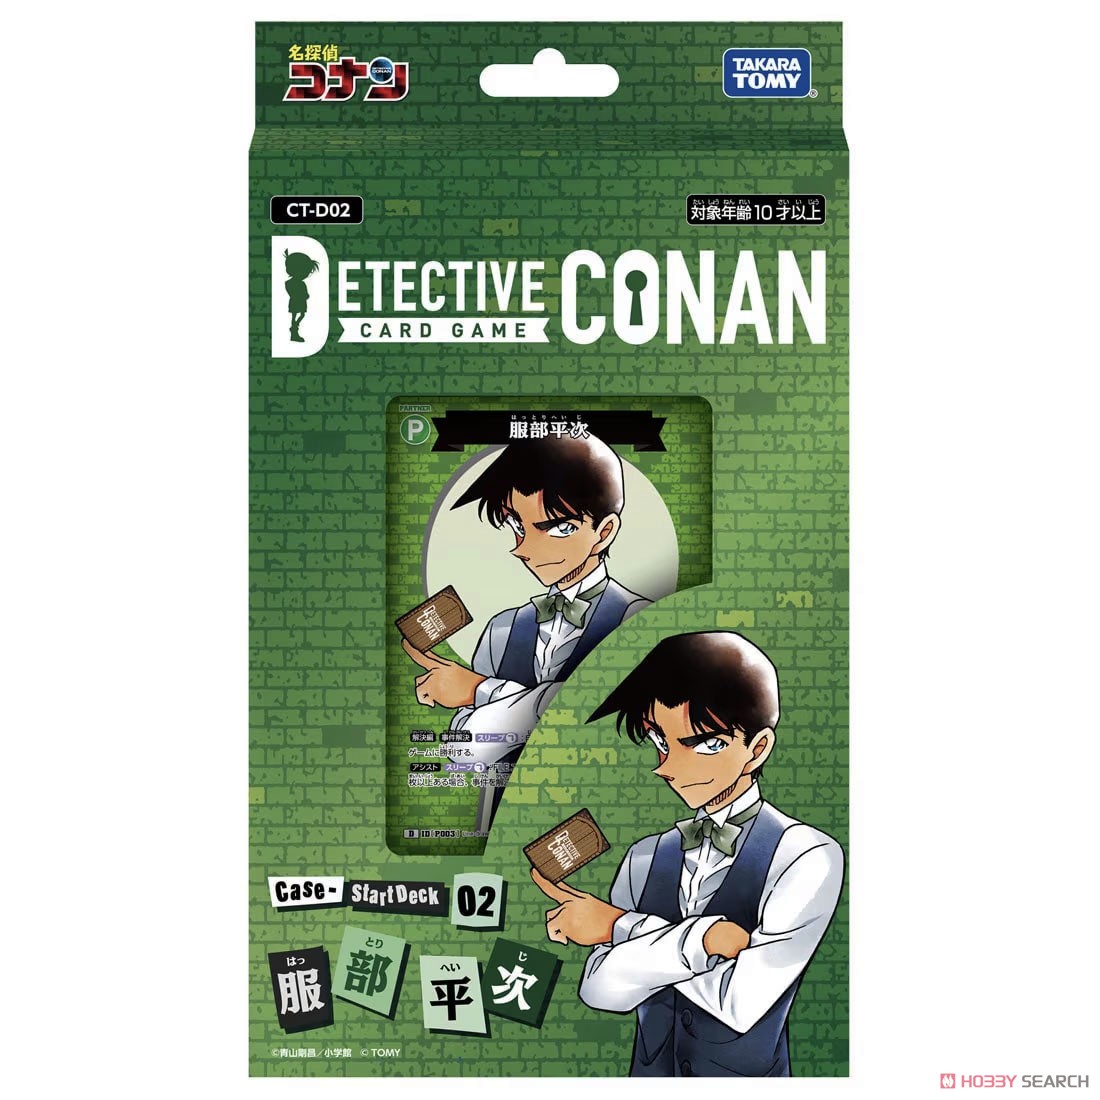 [CT-D02] Detective Conan TCG Case-StartDeck02 [Heiji Hattori] (Trading Cards) Package1